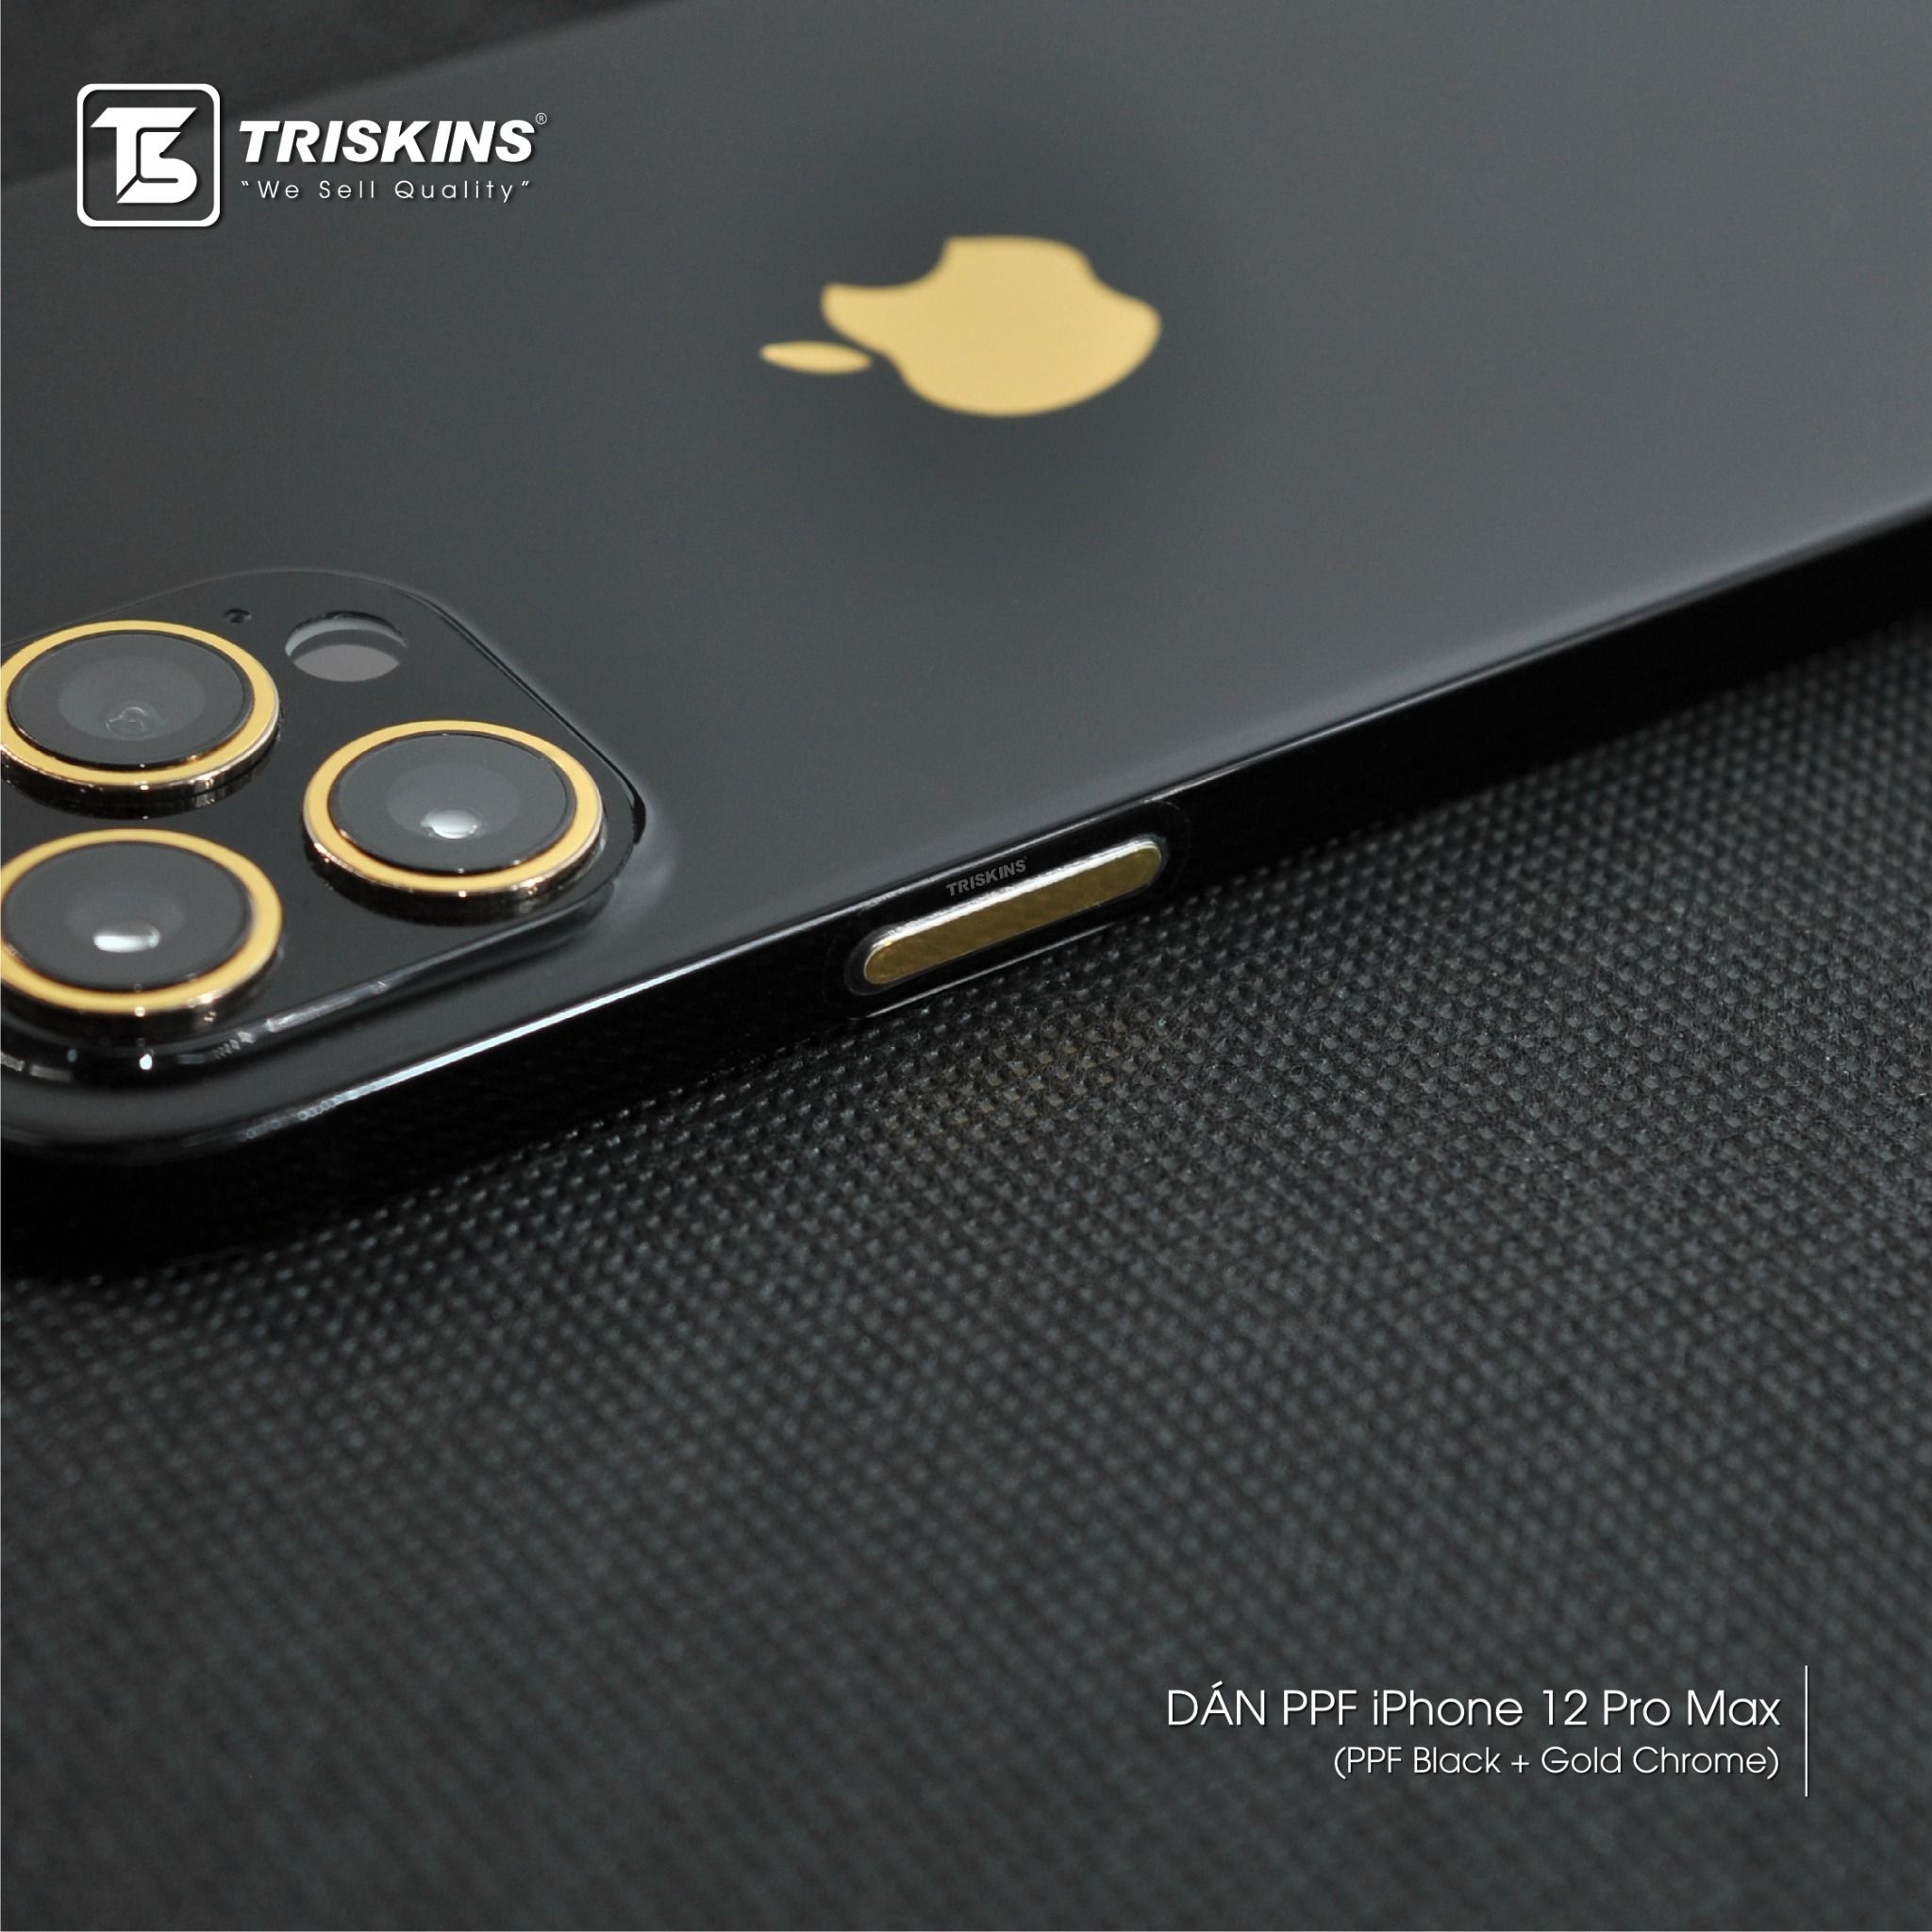  Skin iPhone | PPF Gloss Black 